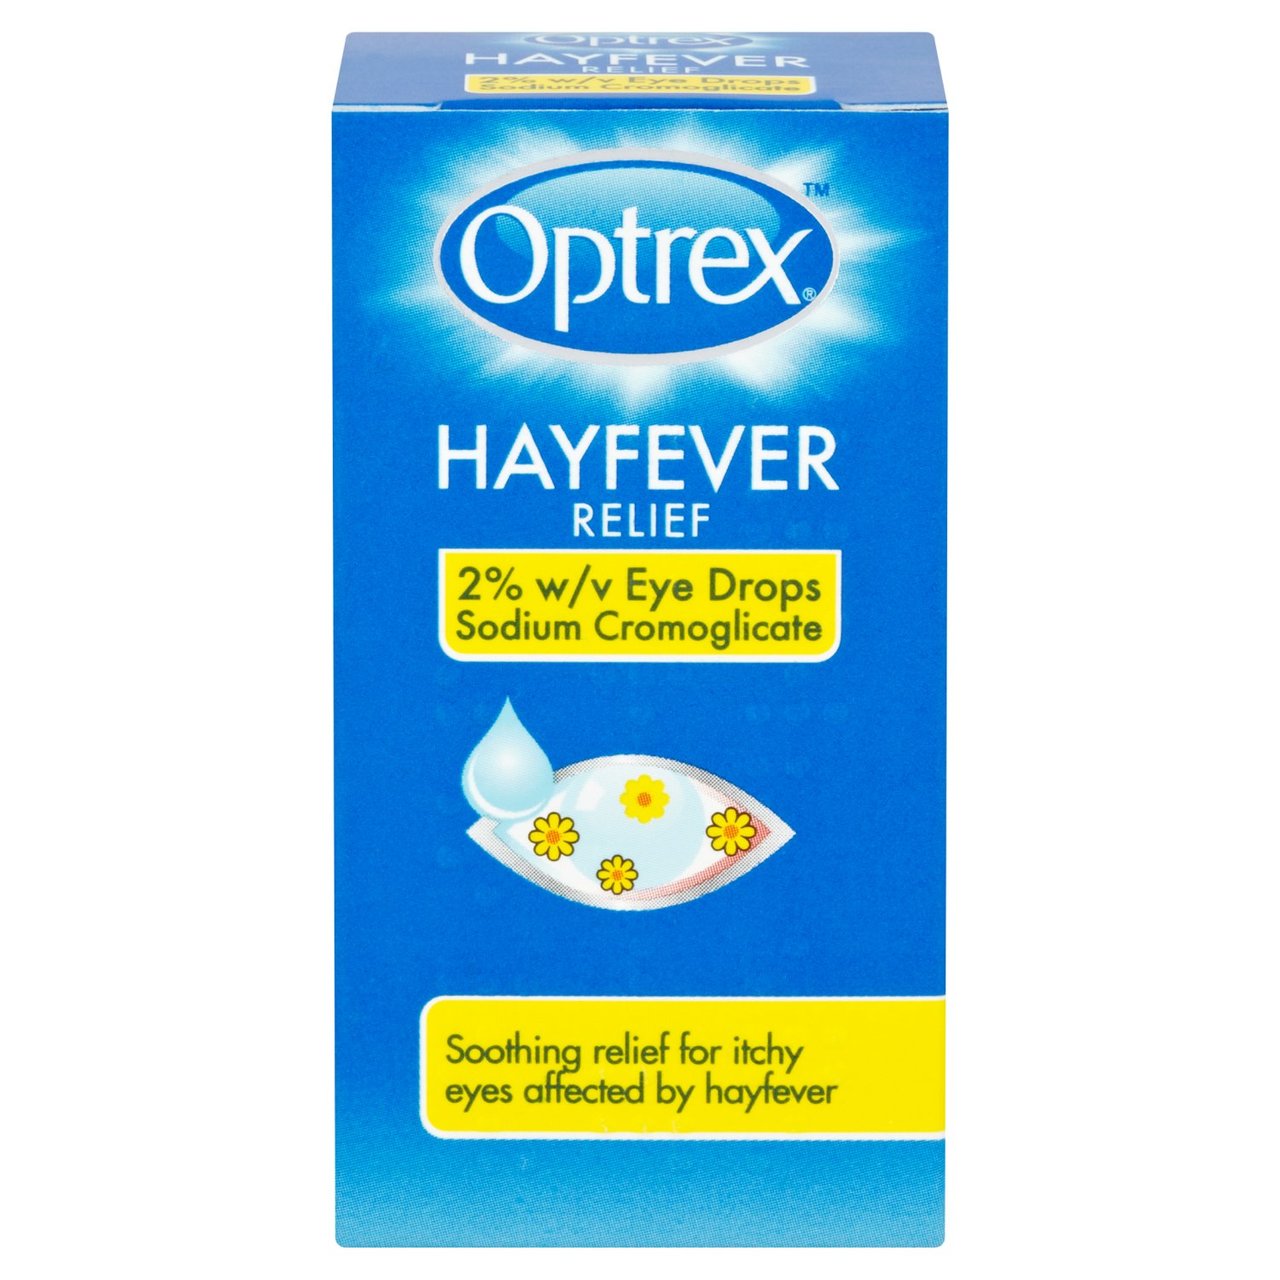 Optrex Hayfever Relief 2% w/v Eye Drops Sodium Cromoglicate 10ml